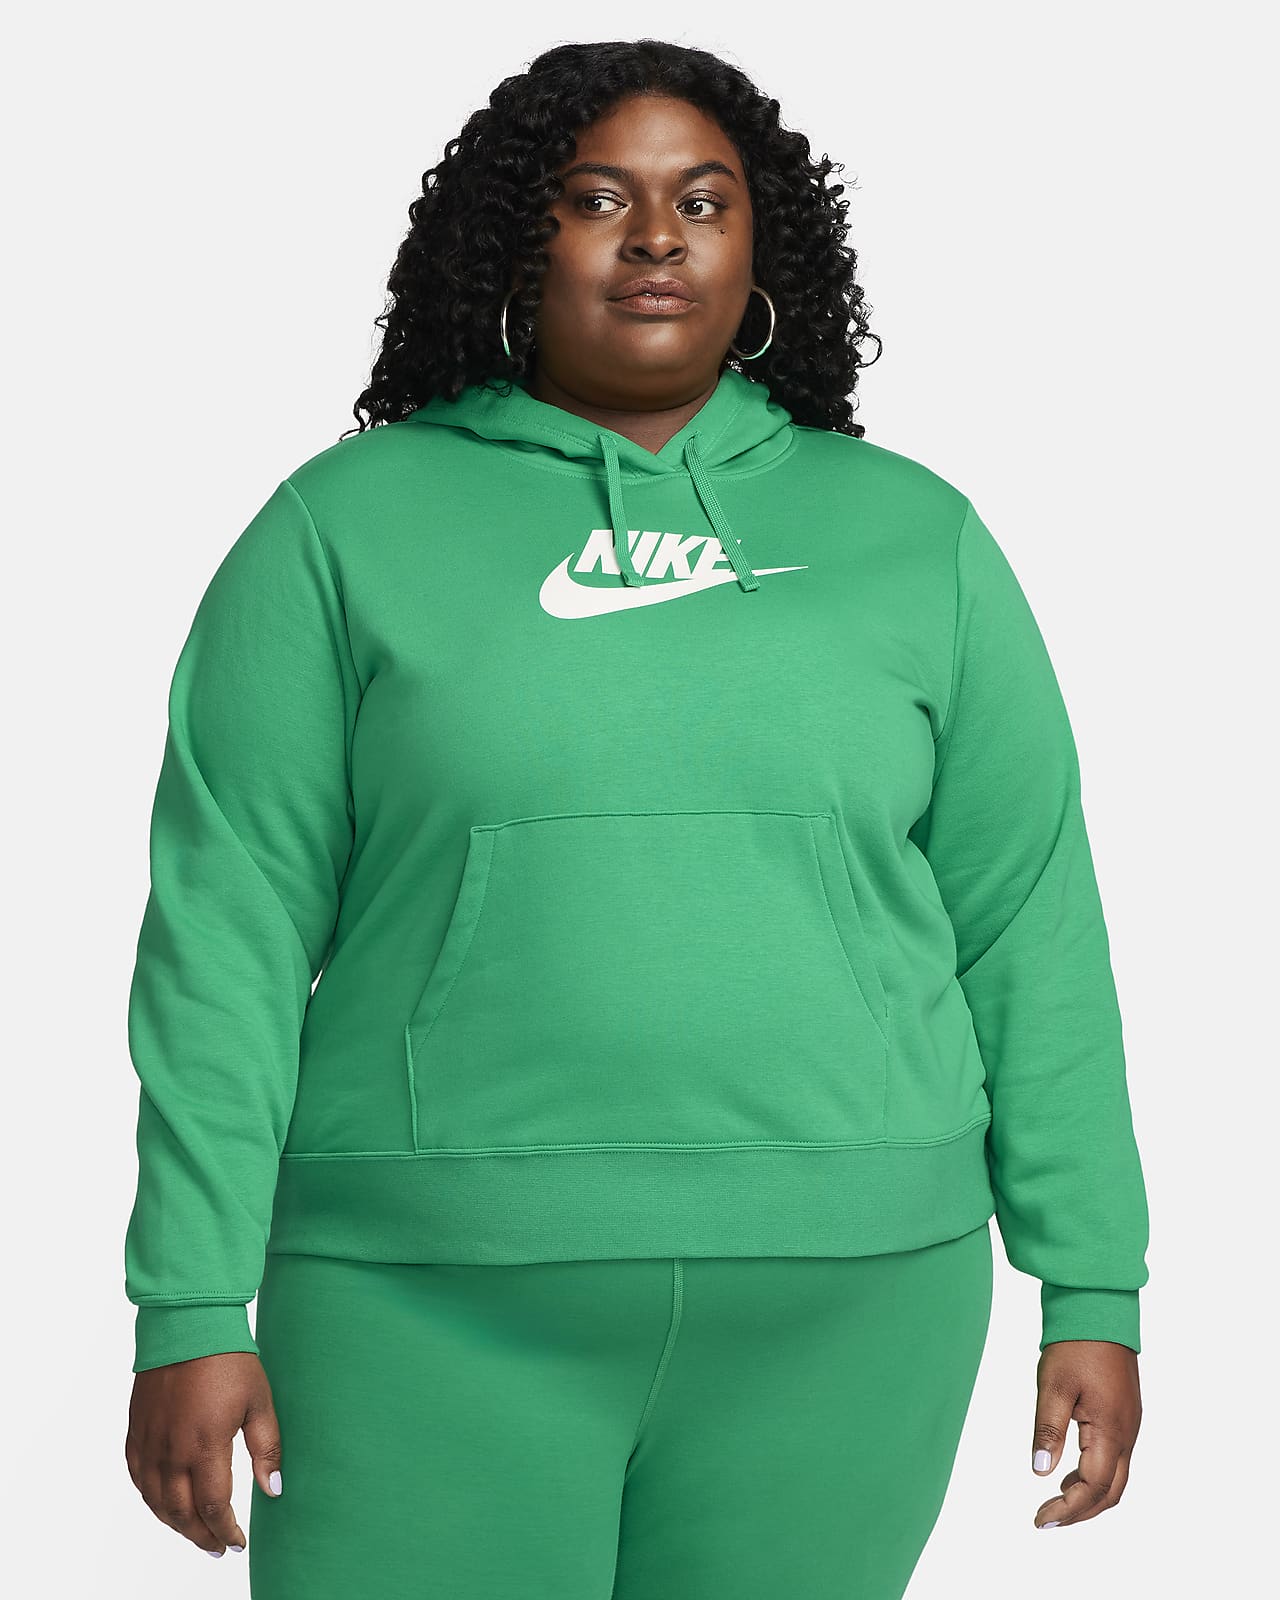 Women's Sale Clothing. Nike ZA